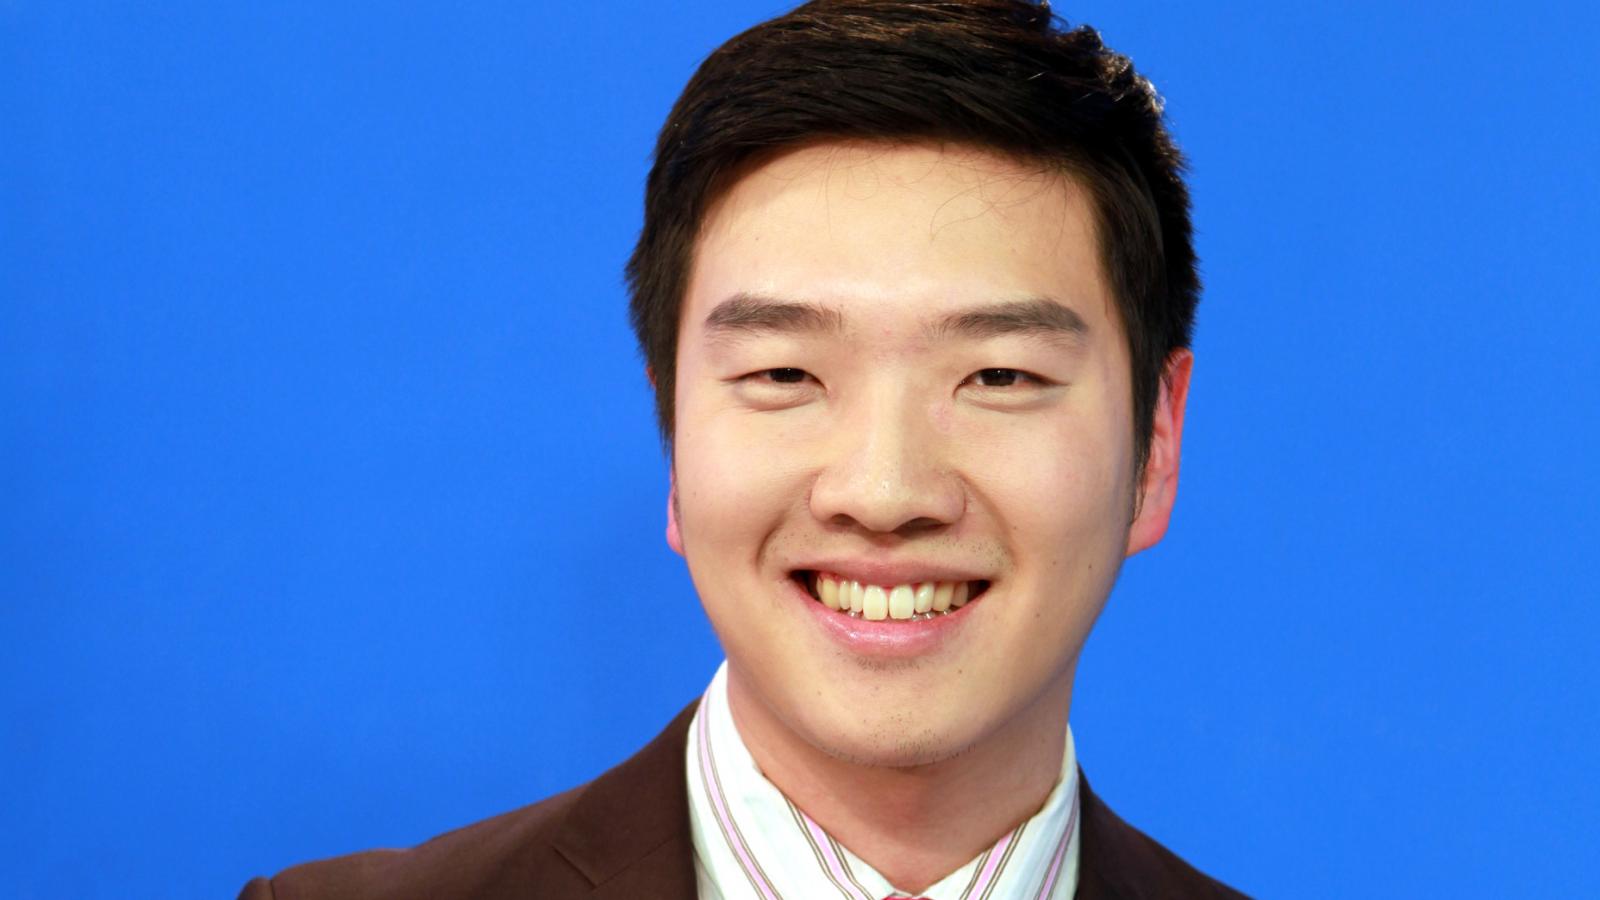 Headshot of Daniel Shin against a blue background.